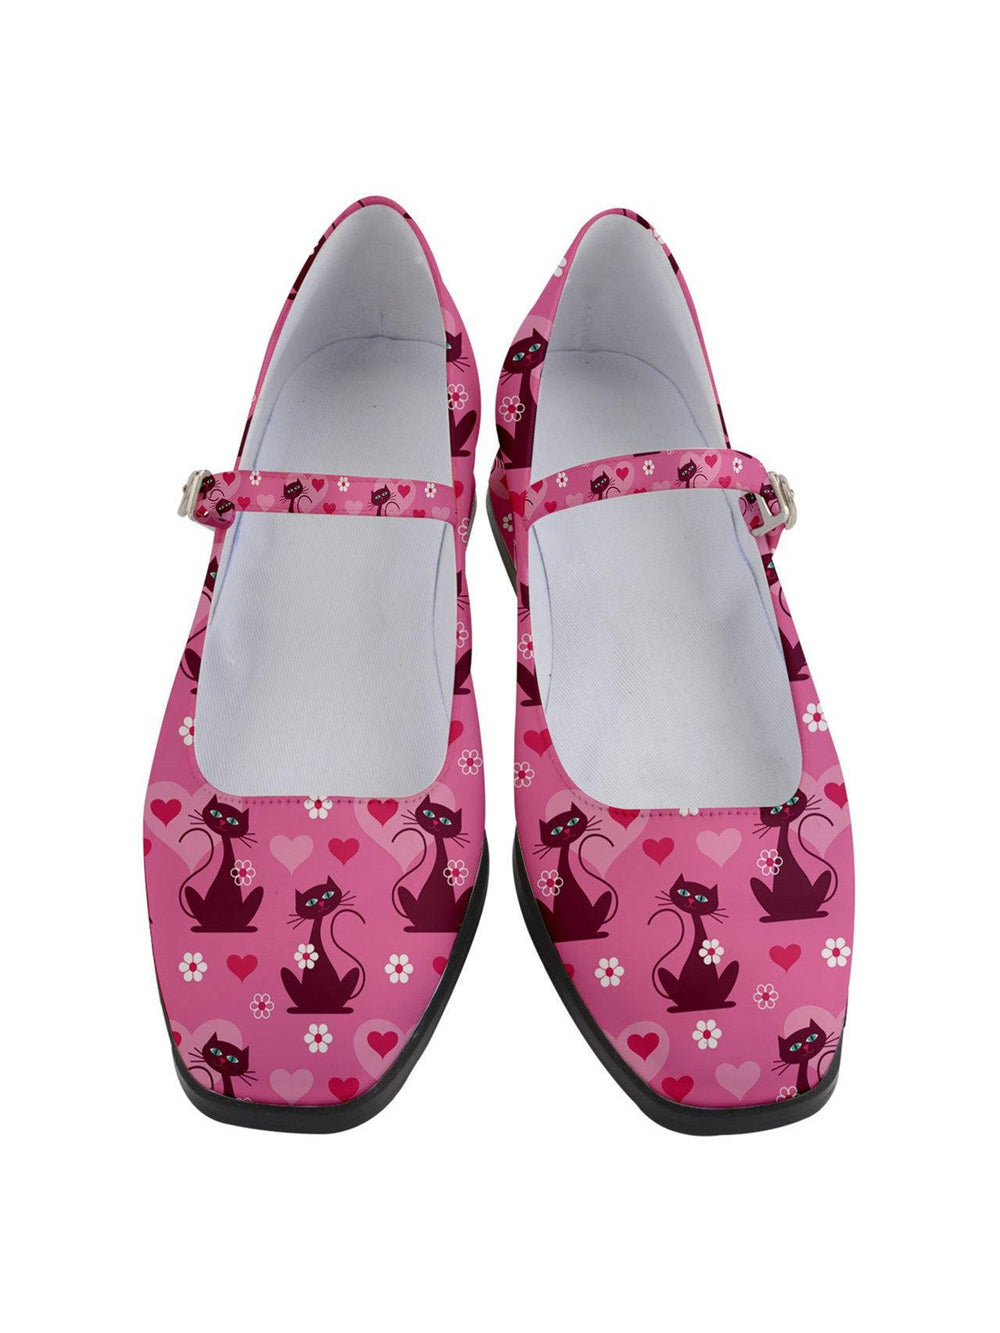 Womens Rose Pinup Shoes Rockabilly Aesthetic Sneakers, Psychobilly Footwear  sold by Pedestrian Lorelei, SKU 40388273